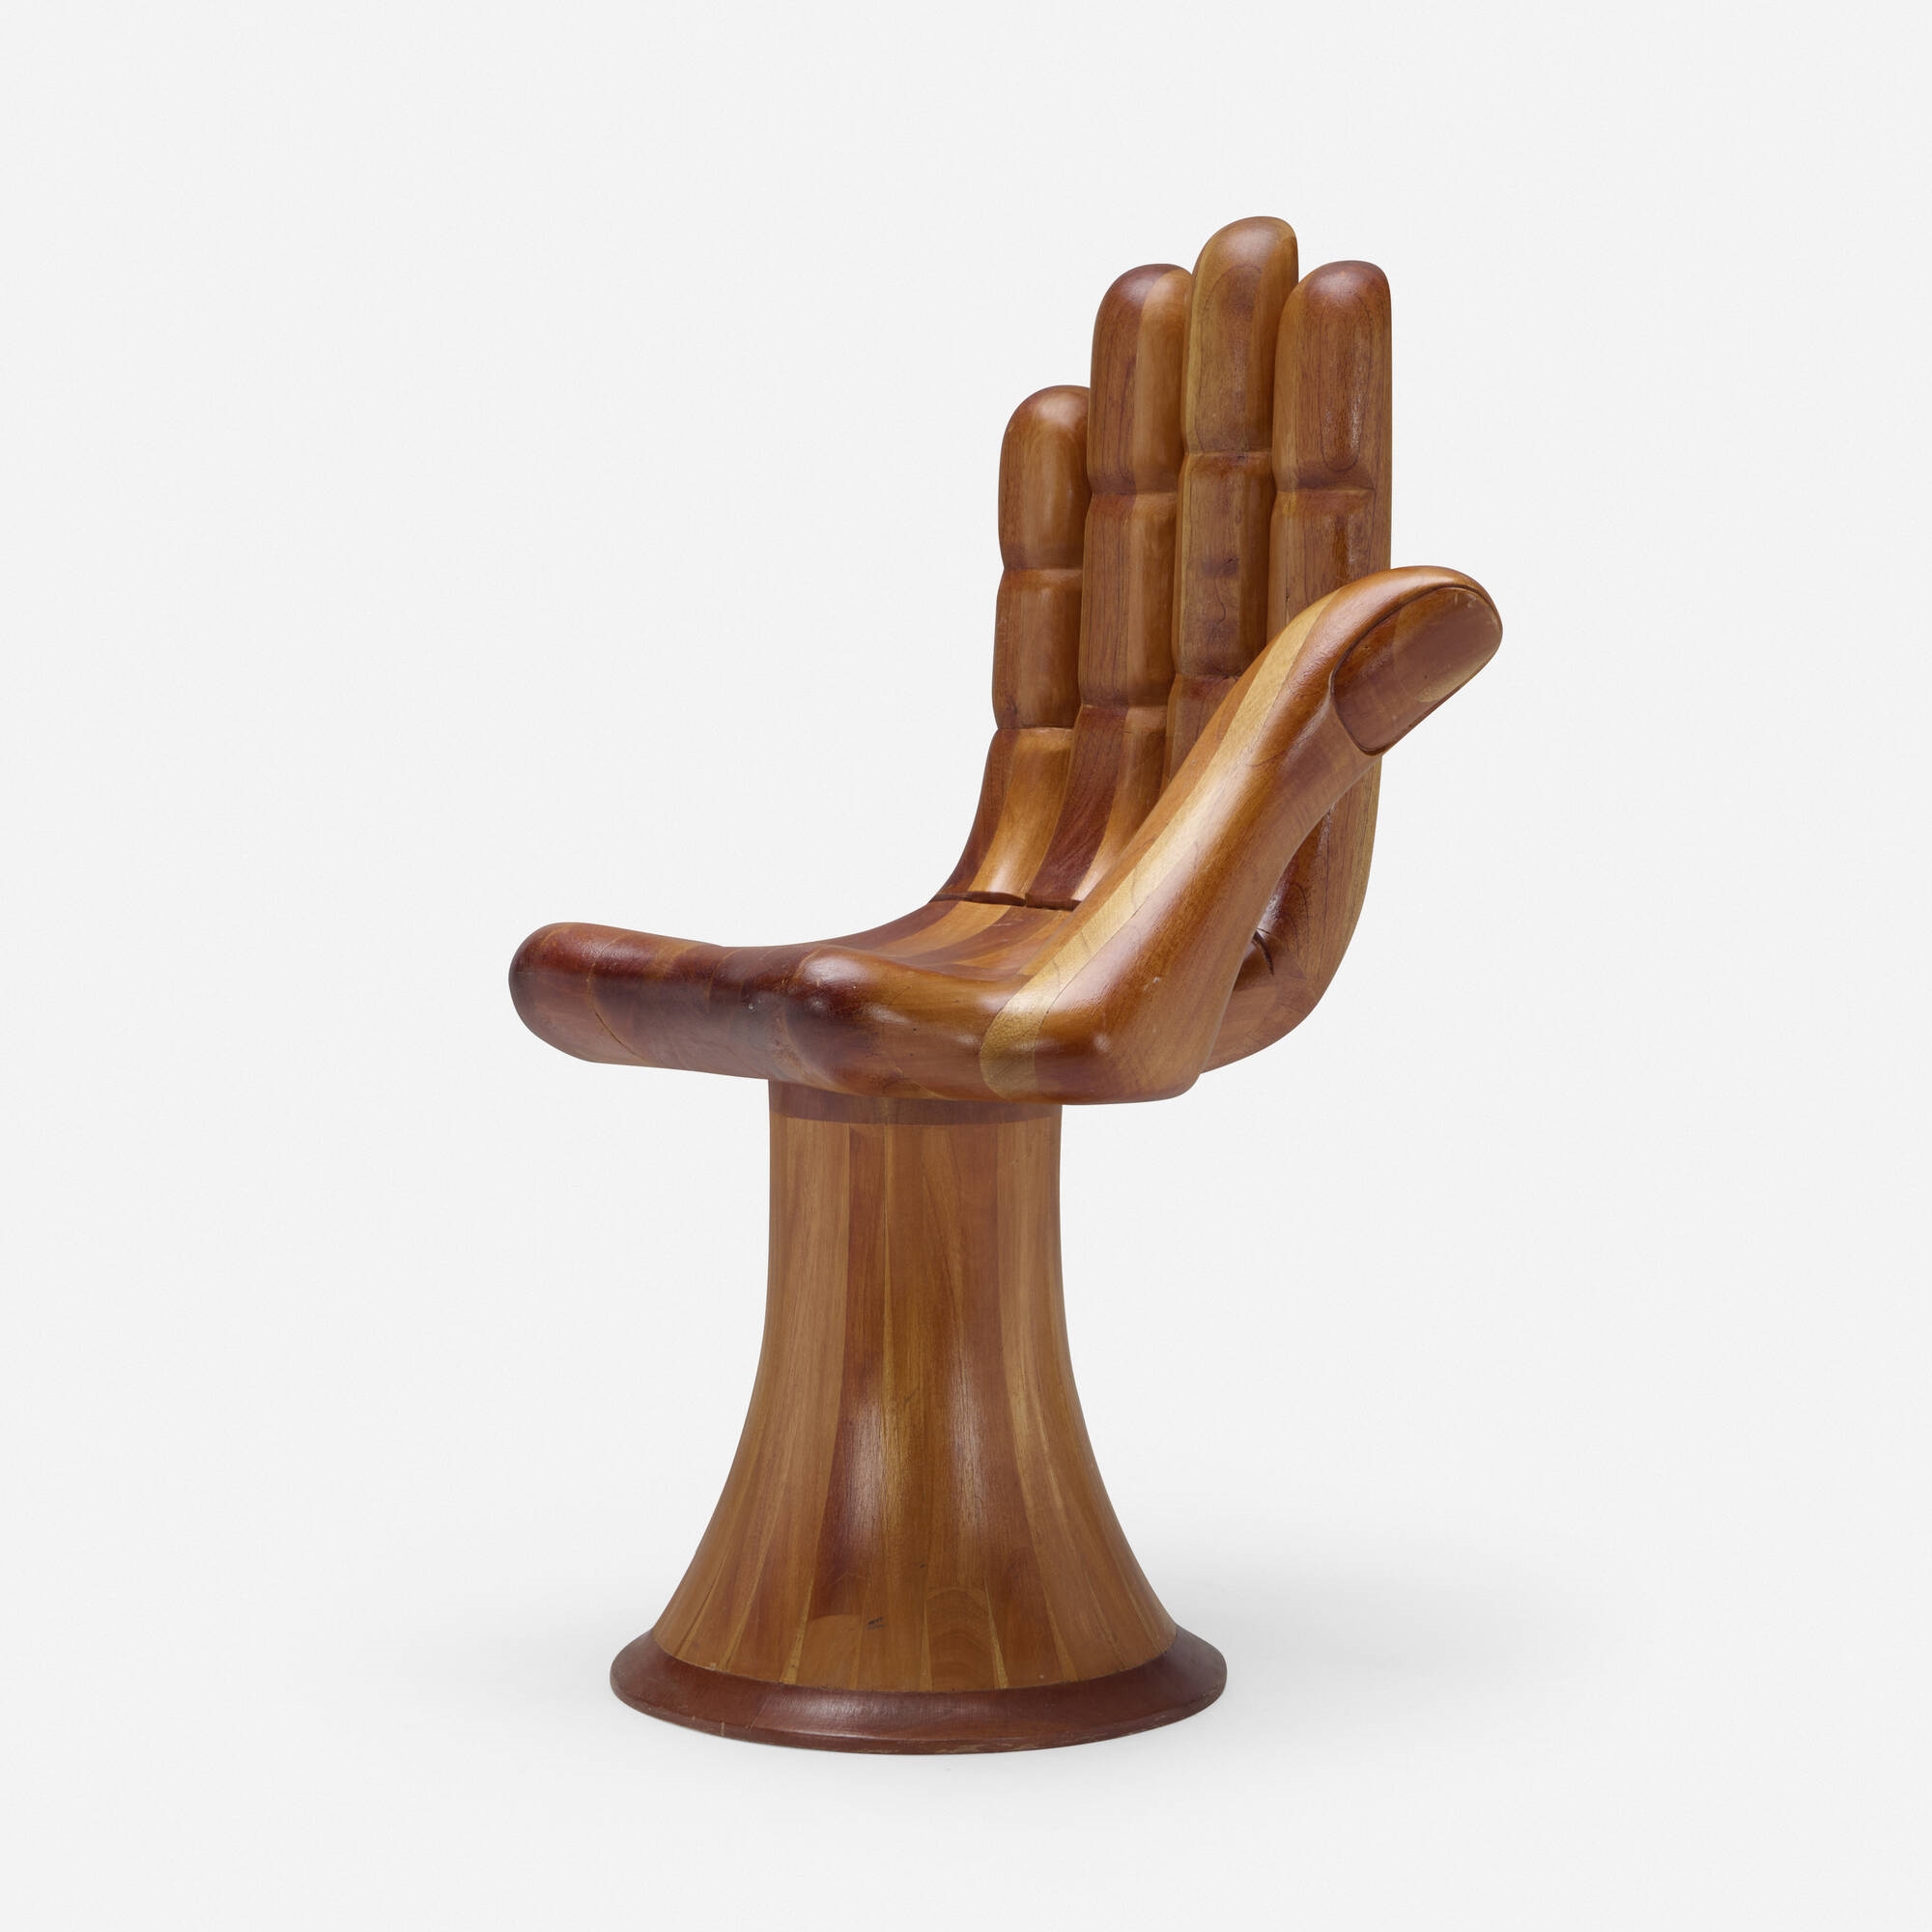 Hand chair by Pedro Friedeberg, circa 1965